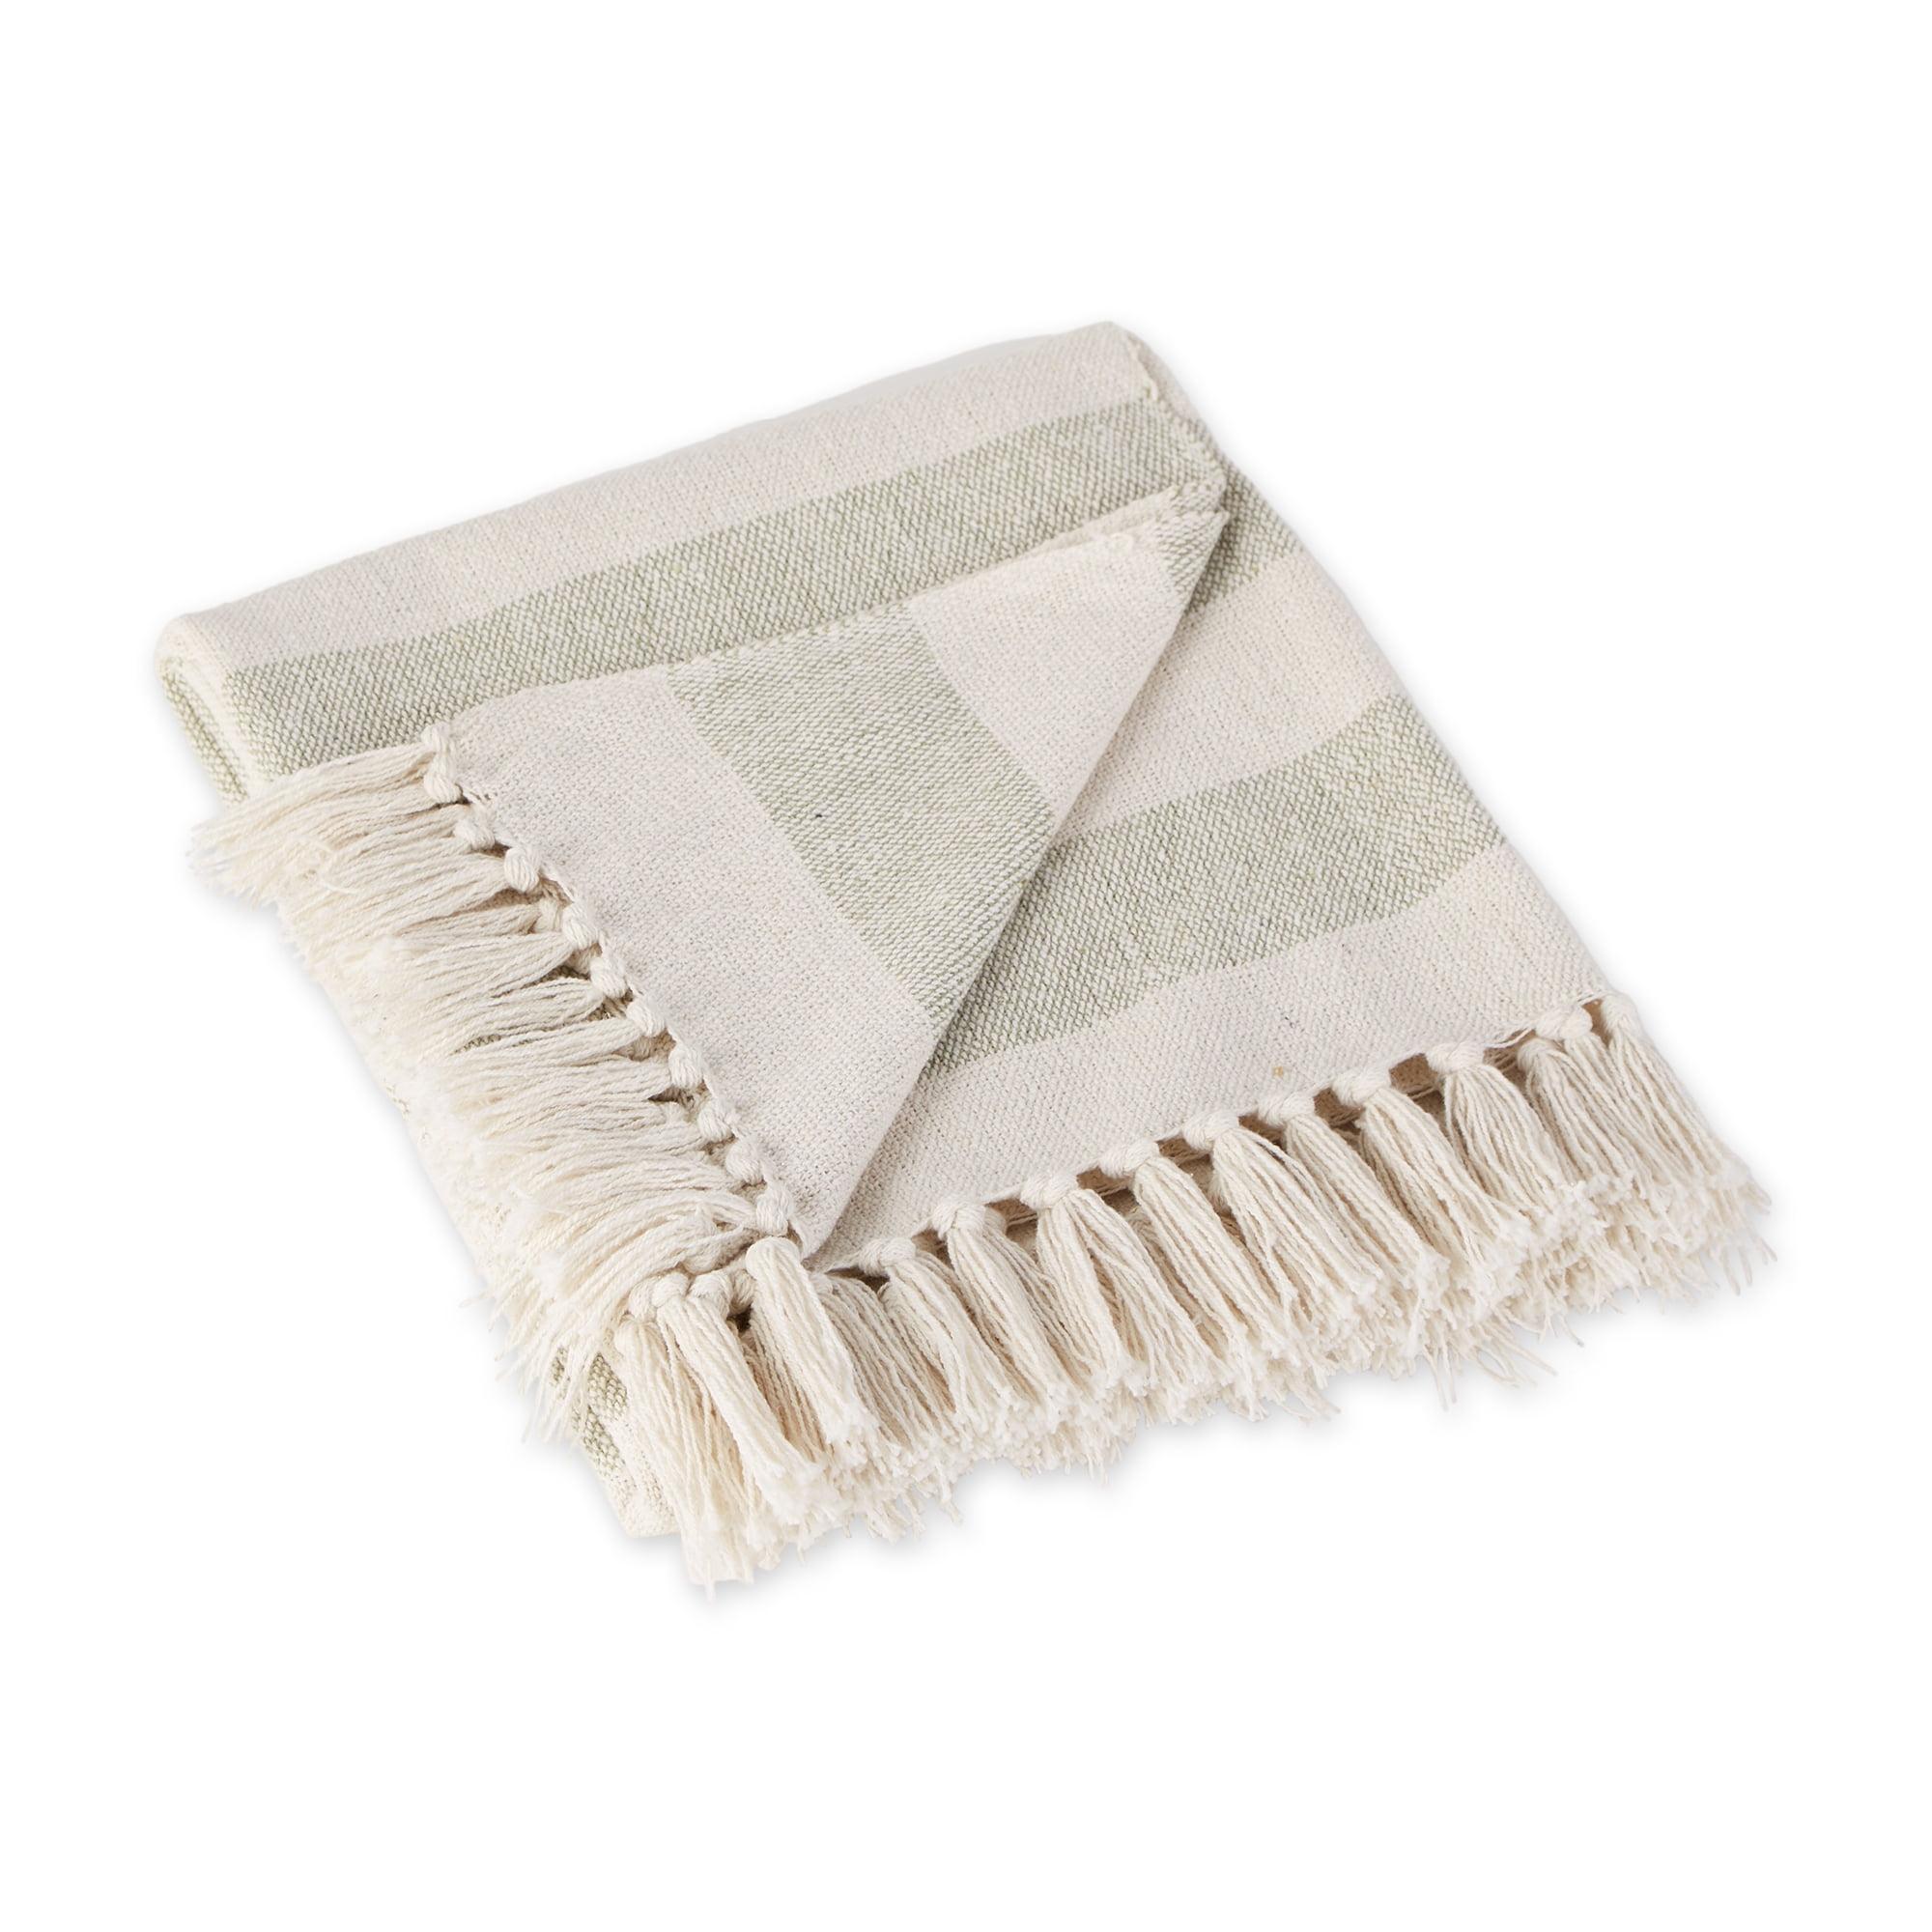 Artichoke and Cream Modern Cotton Stripe Throw Blanket 50x60"